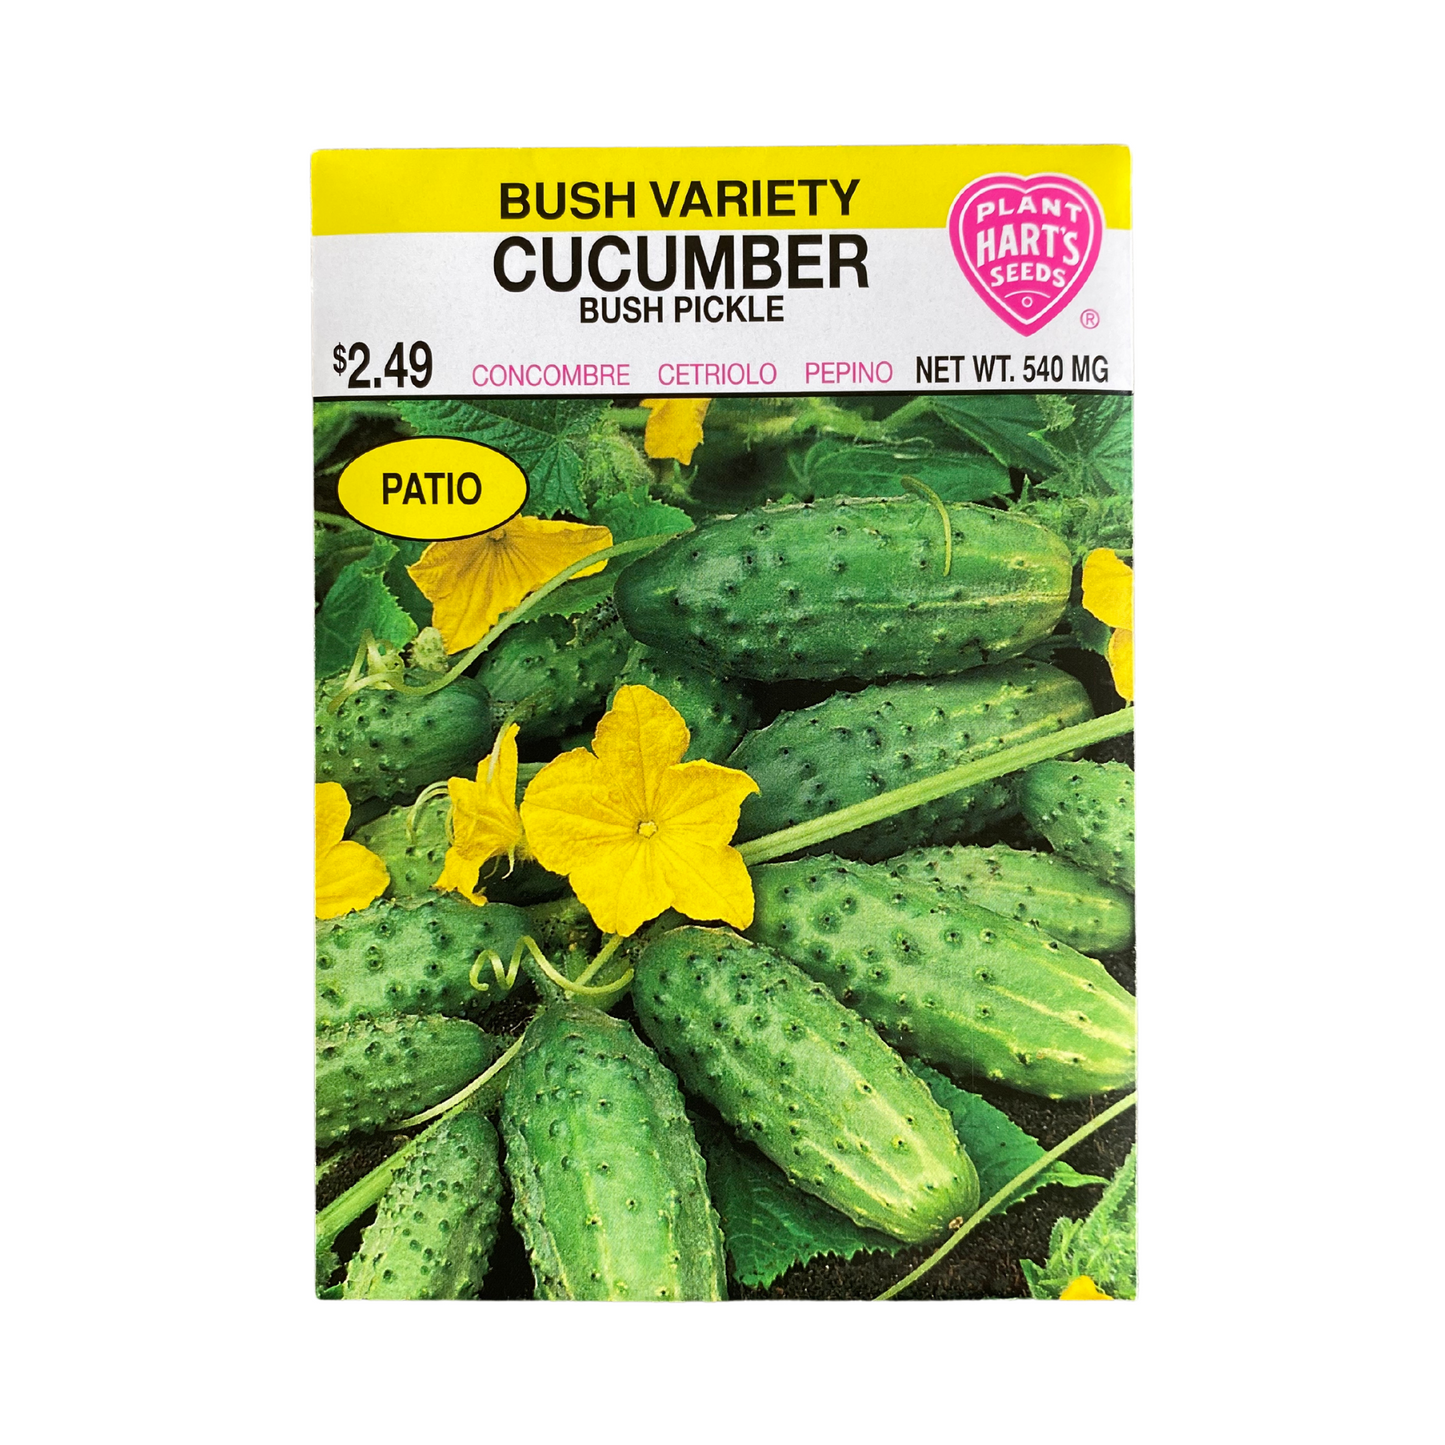 Cucumber Wisconsin SMR 58 Pickling